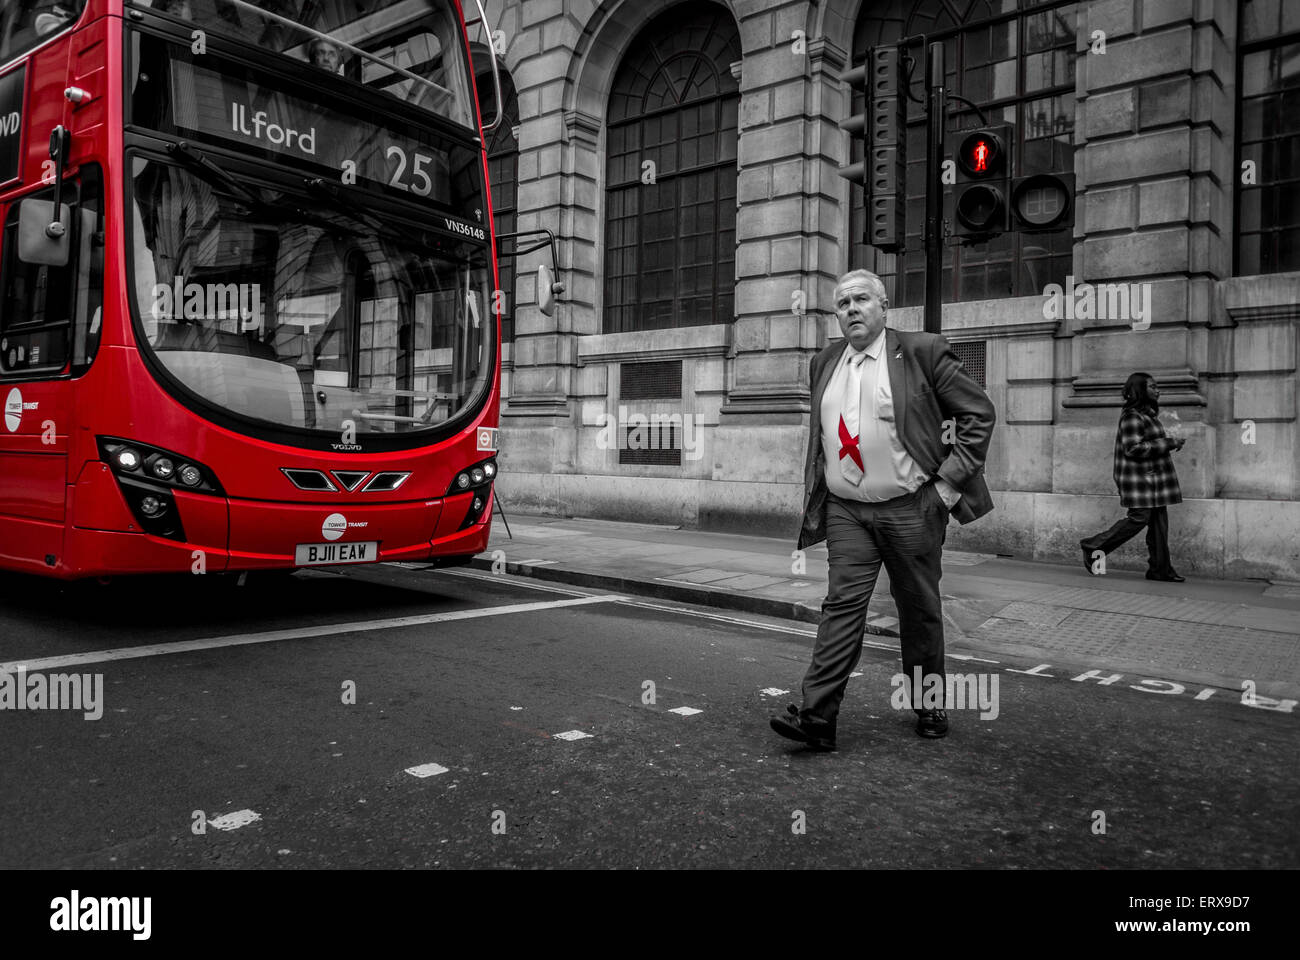 Businessman with French flag tie crossing Road en face de red double decker bus, Londres, Royaume-Uni. Banque D'Images